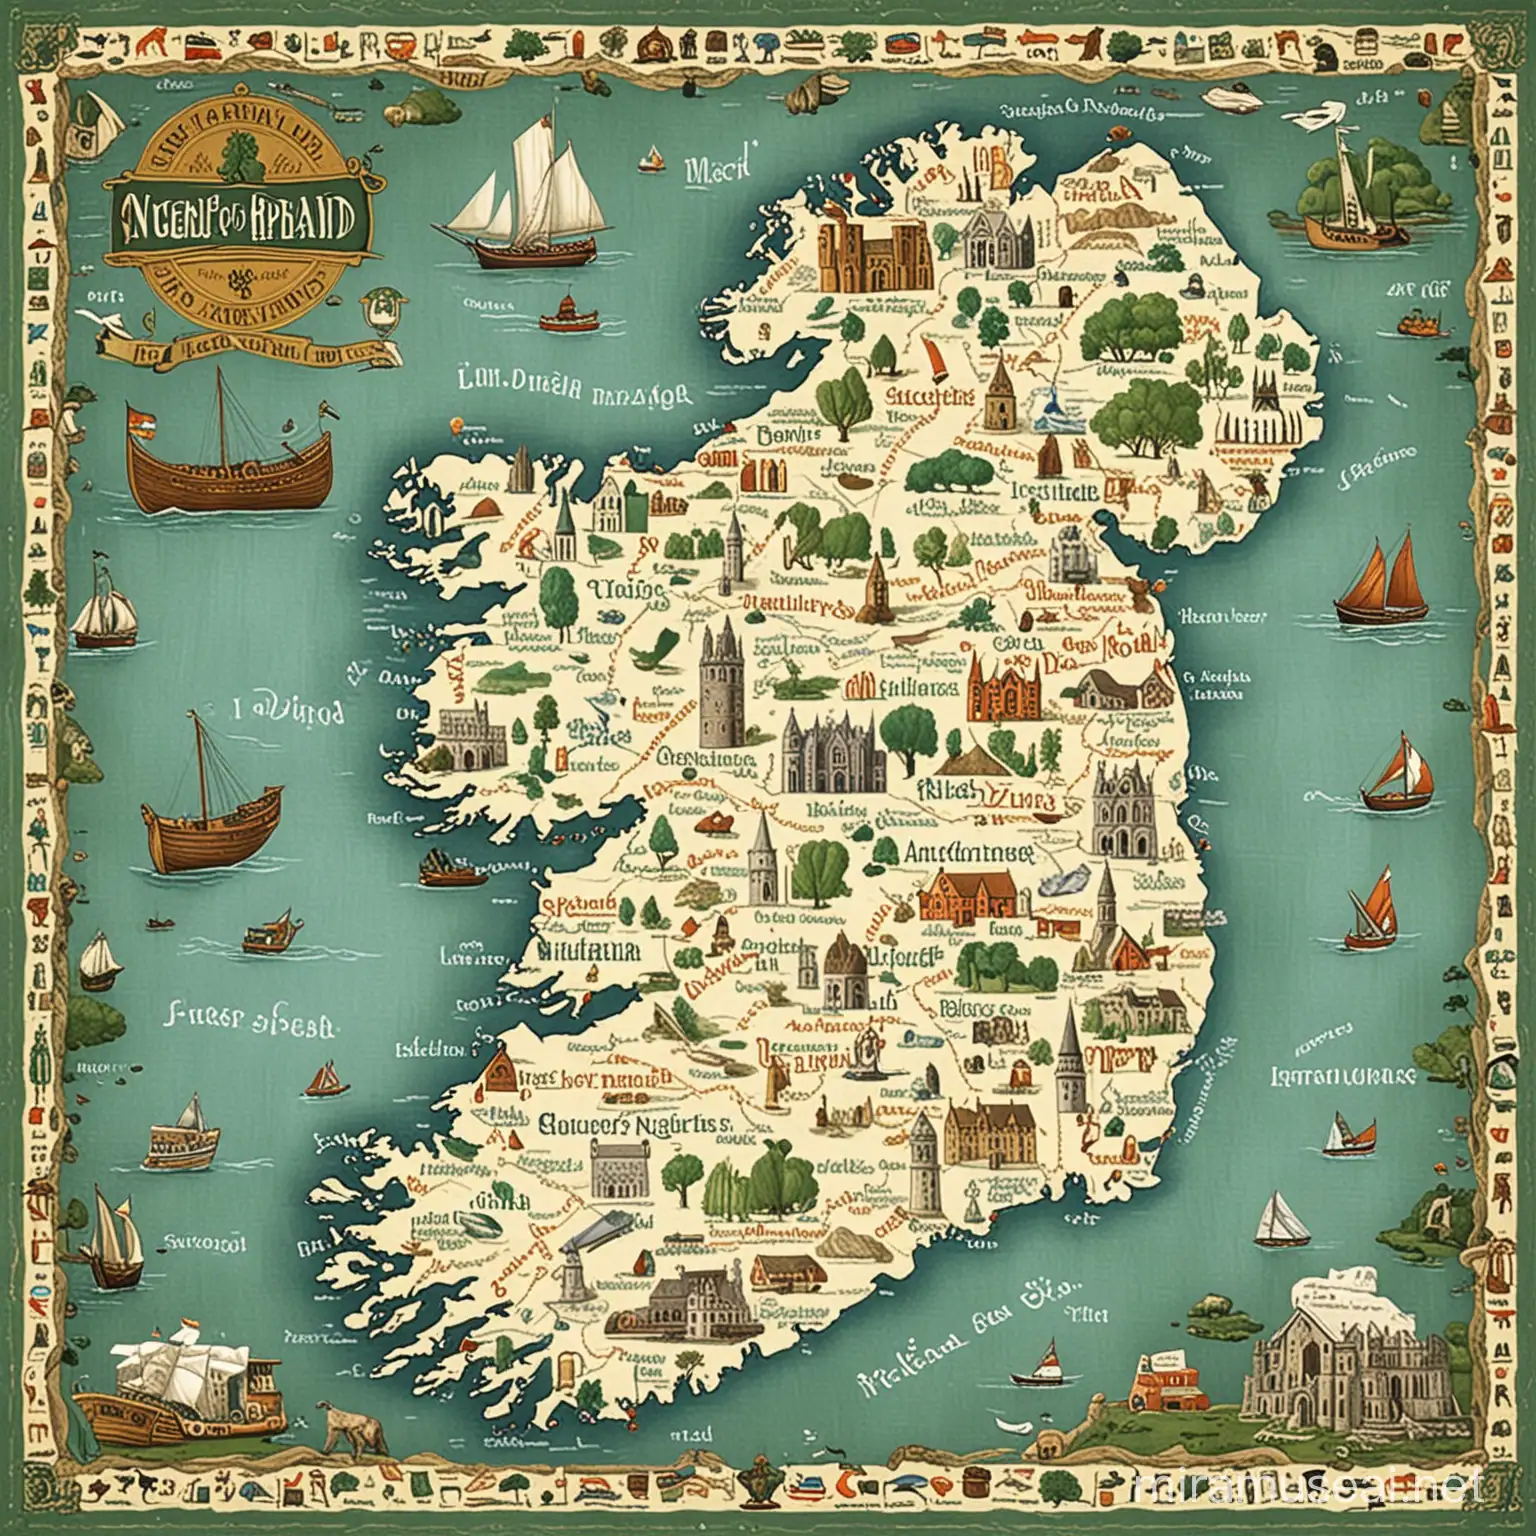 the map of ireland featuring famous Irish landmarks


